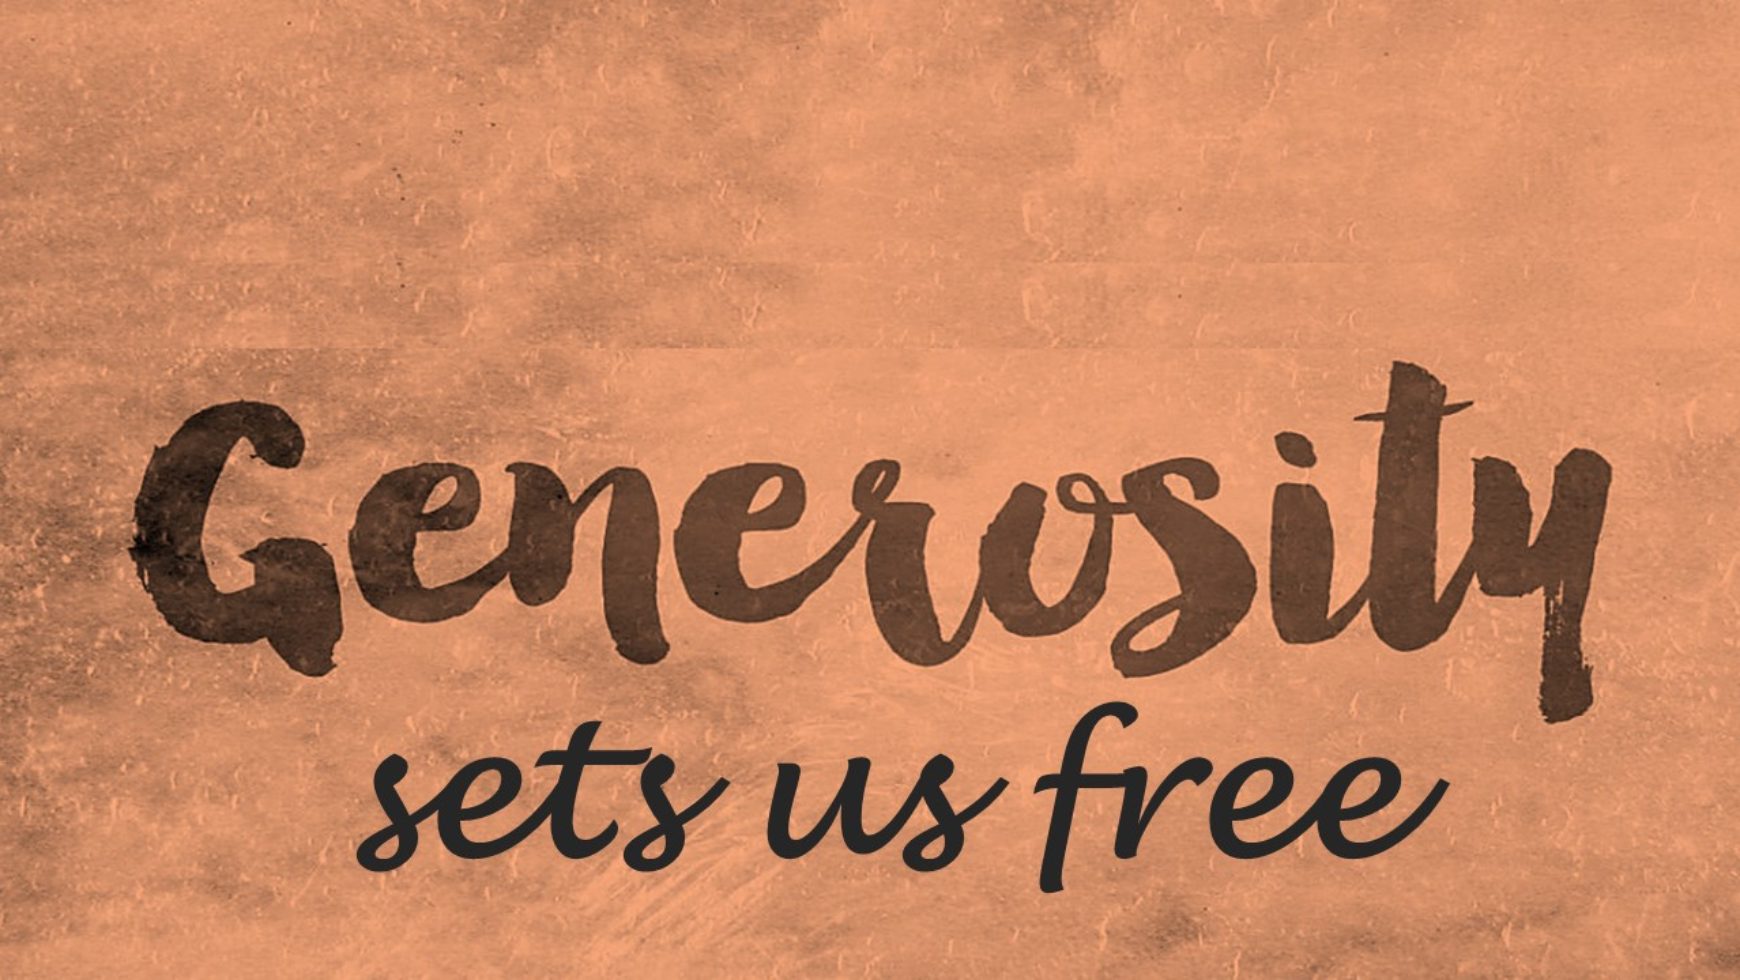 Generosity sets us free